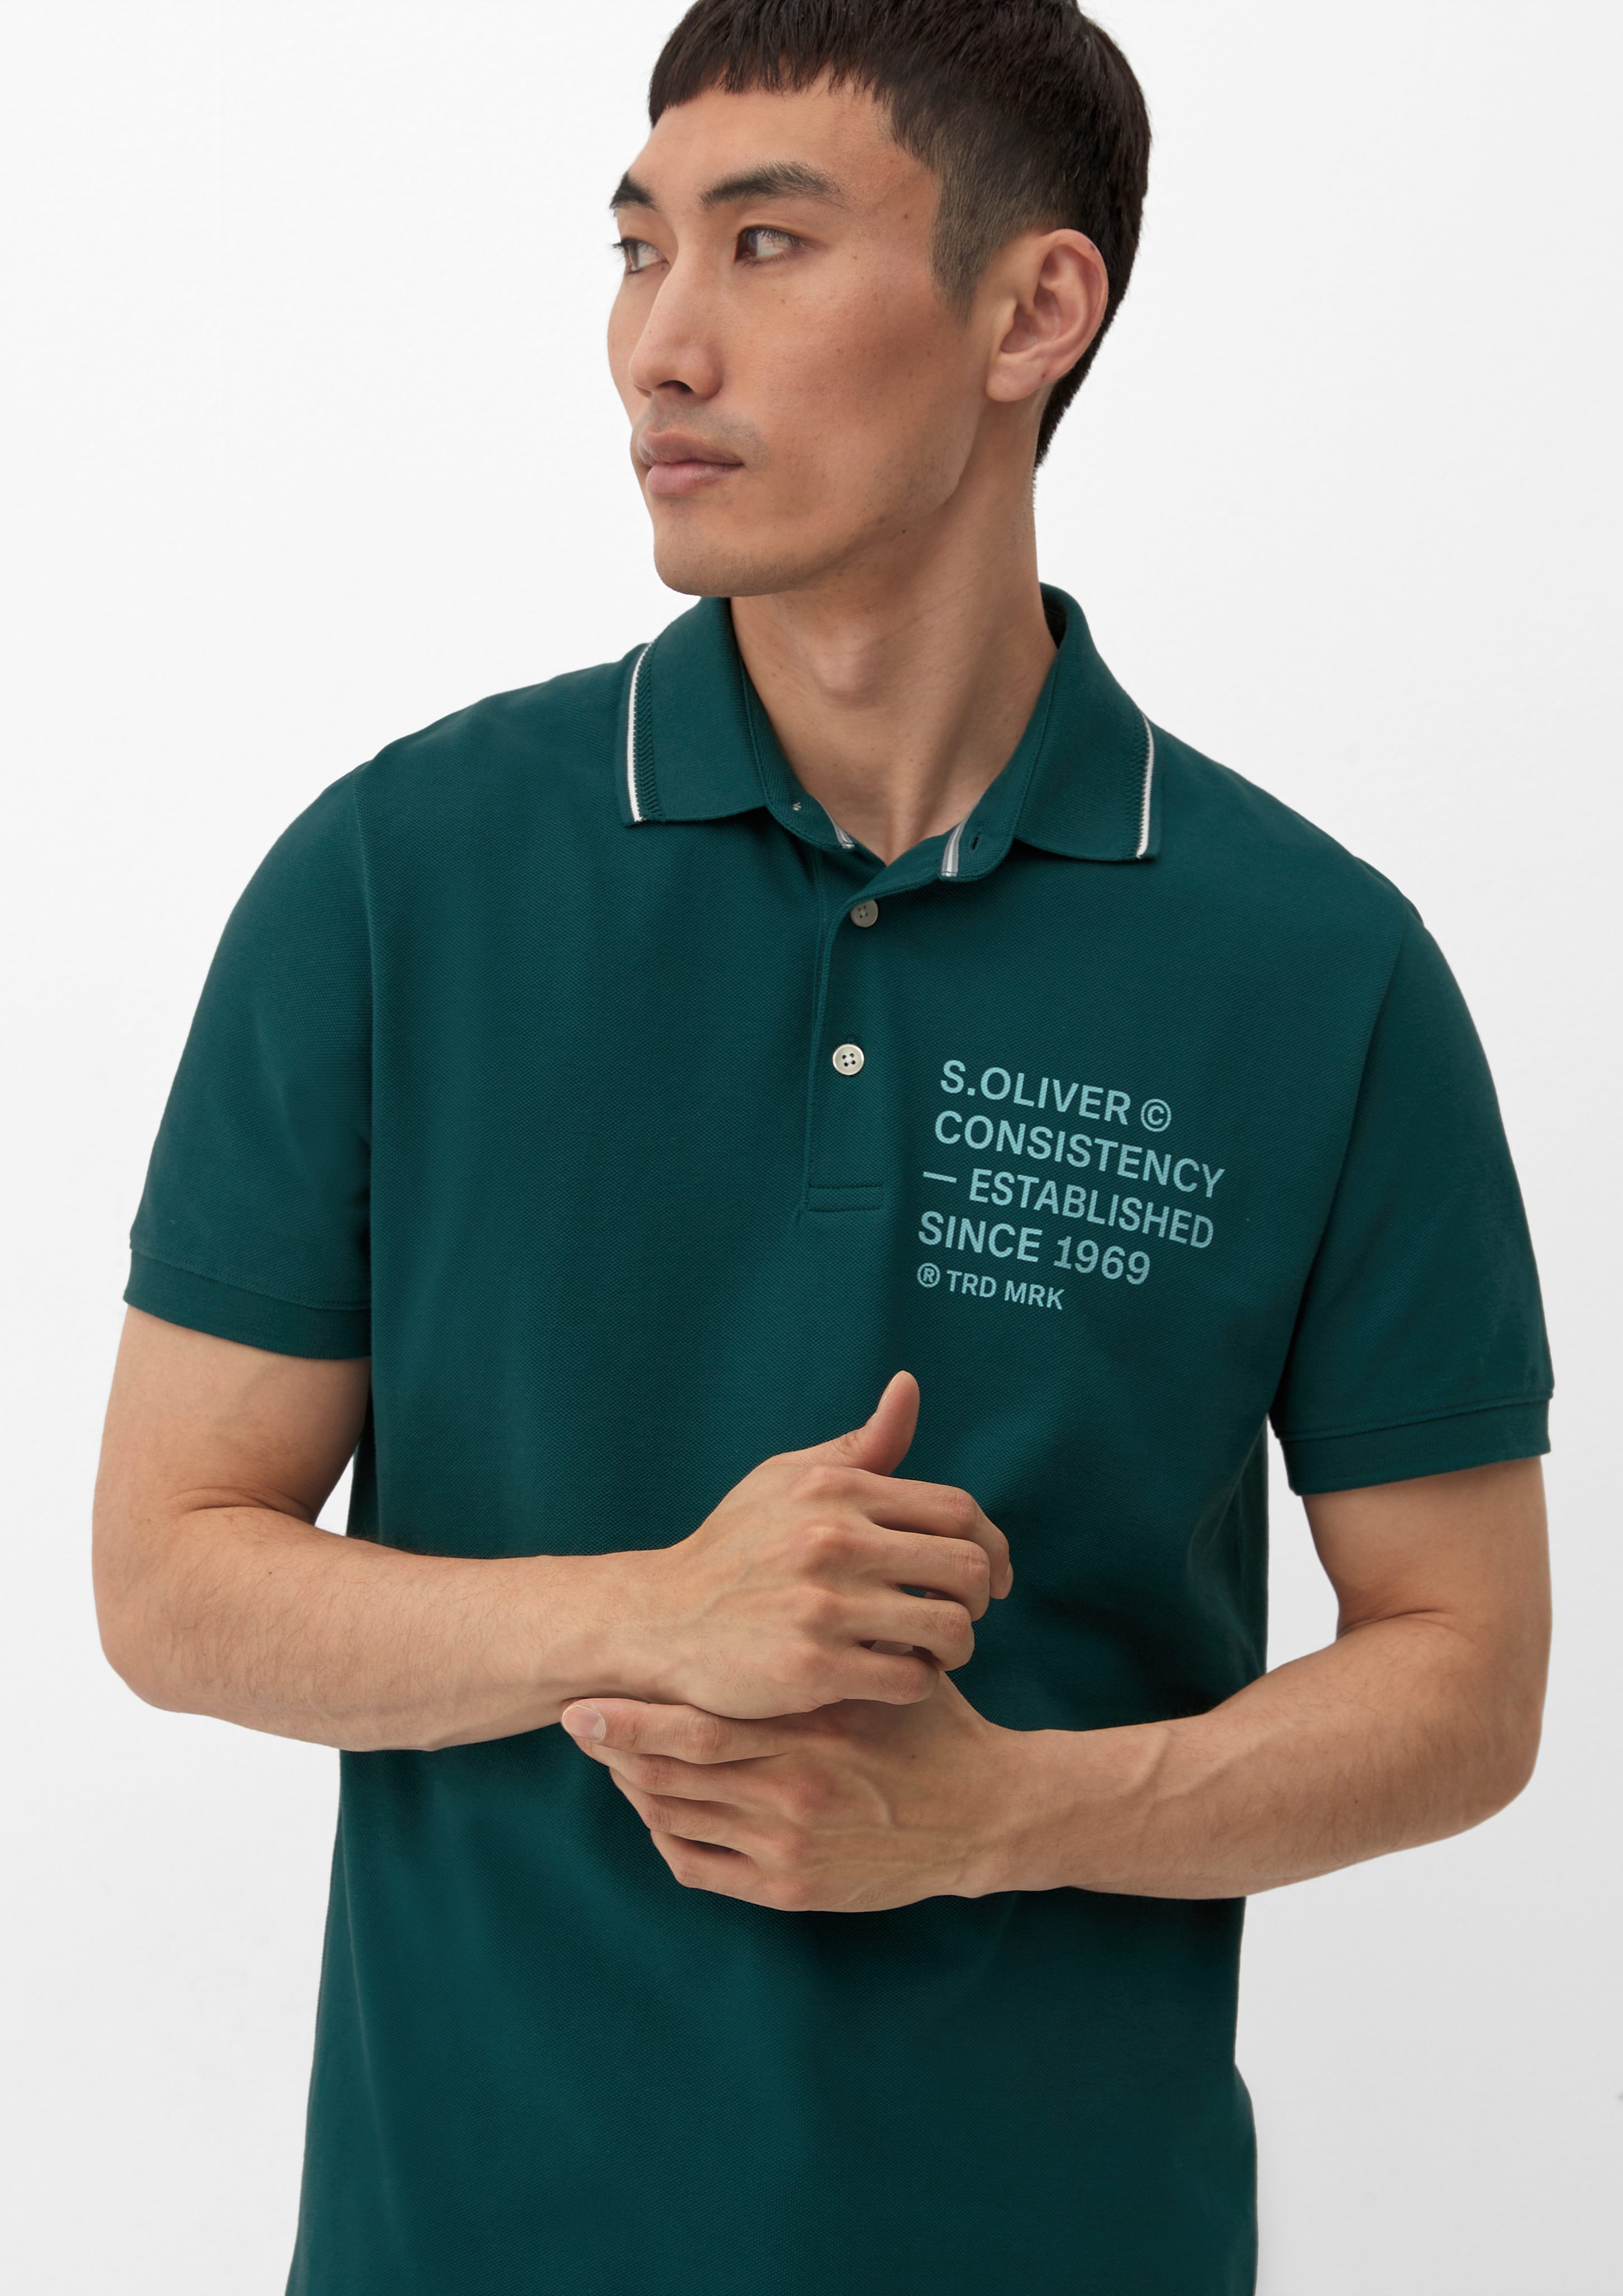 s.Oliver Kurzarmshirt Poloshirt mit Piquéstruktur Artwork, Blende tannengrün | T-Shirts